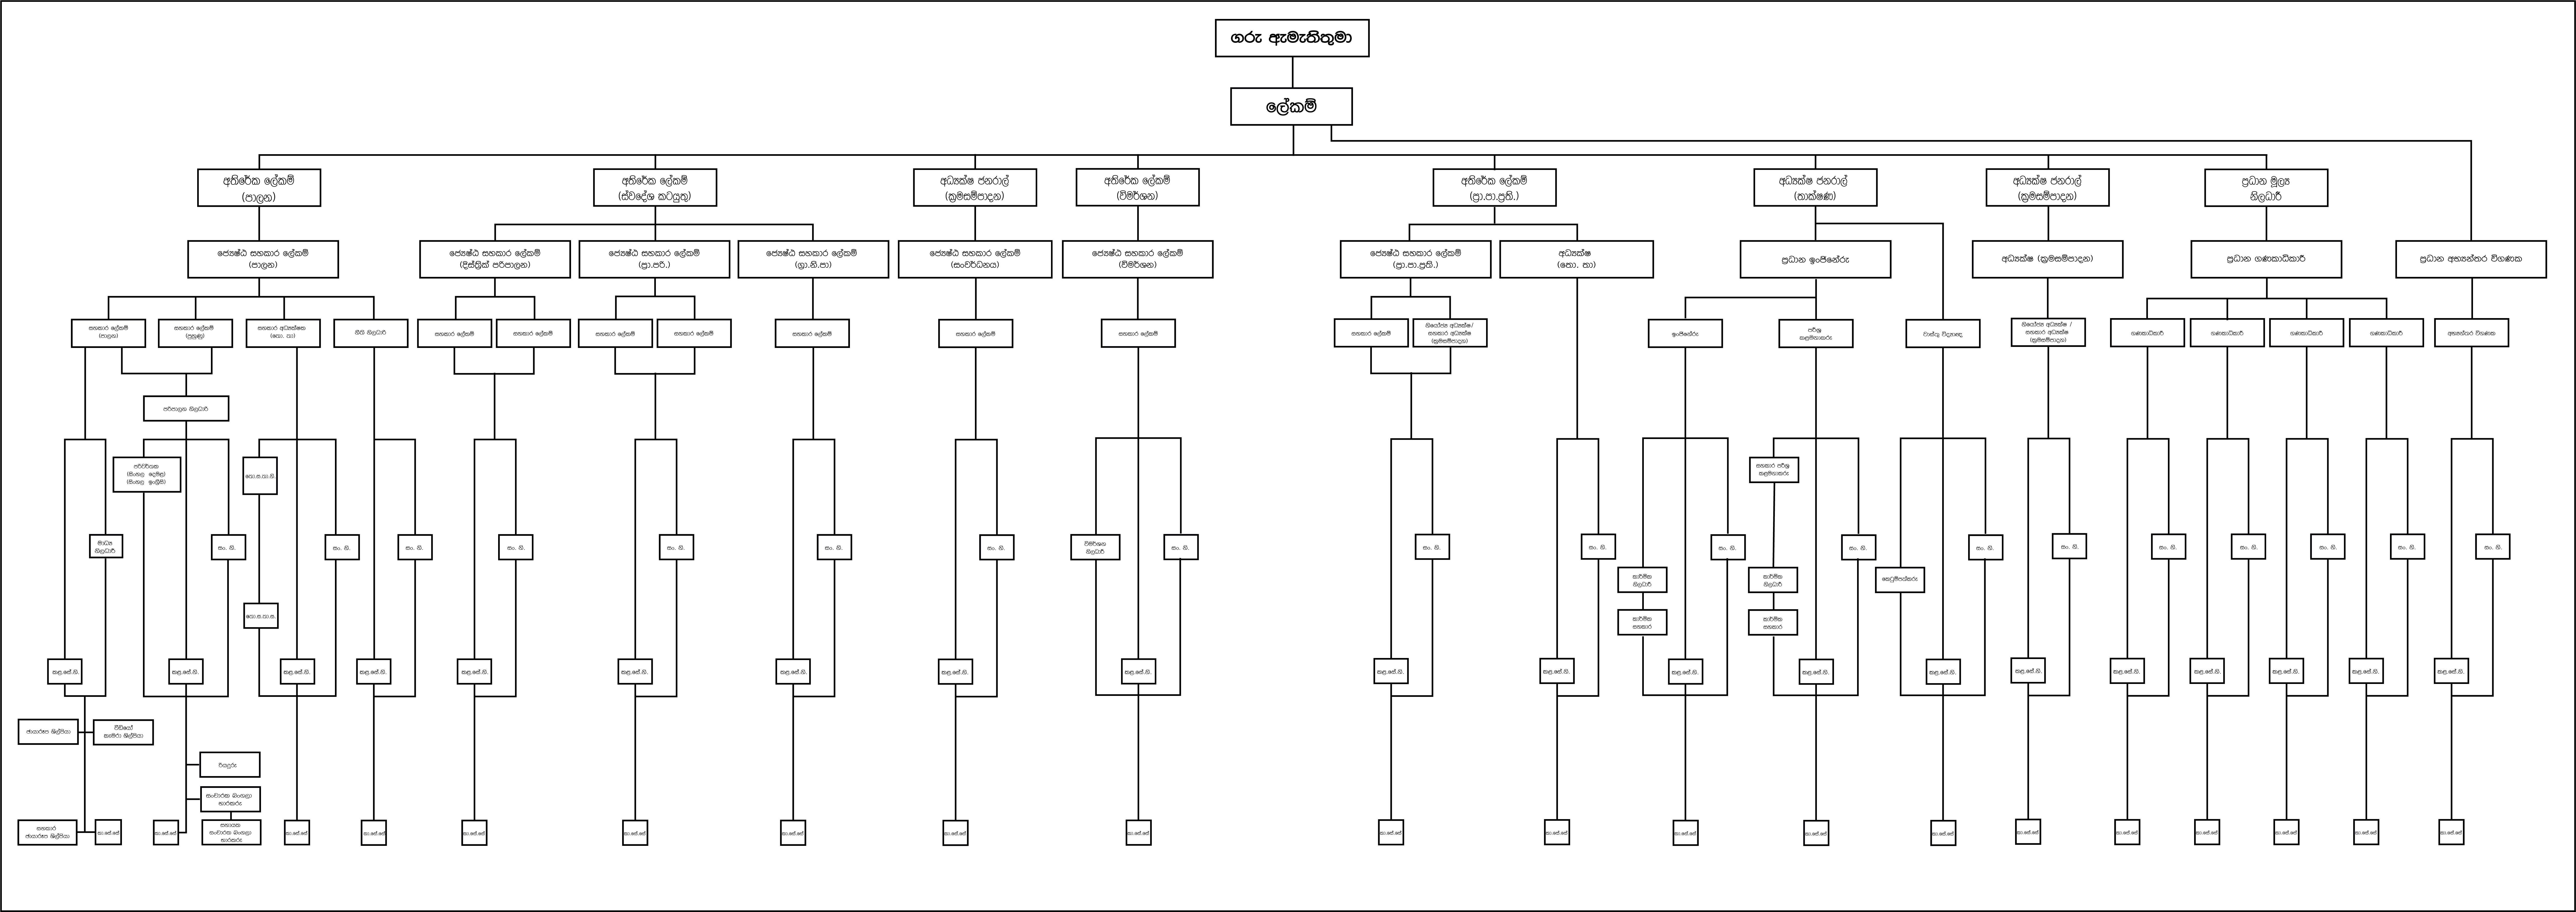 MOHA Organizational Structure en